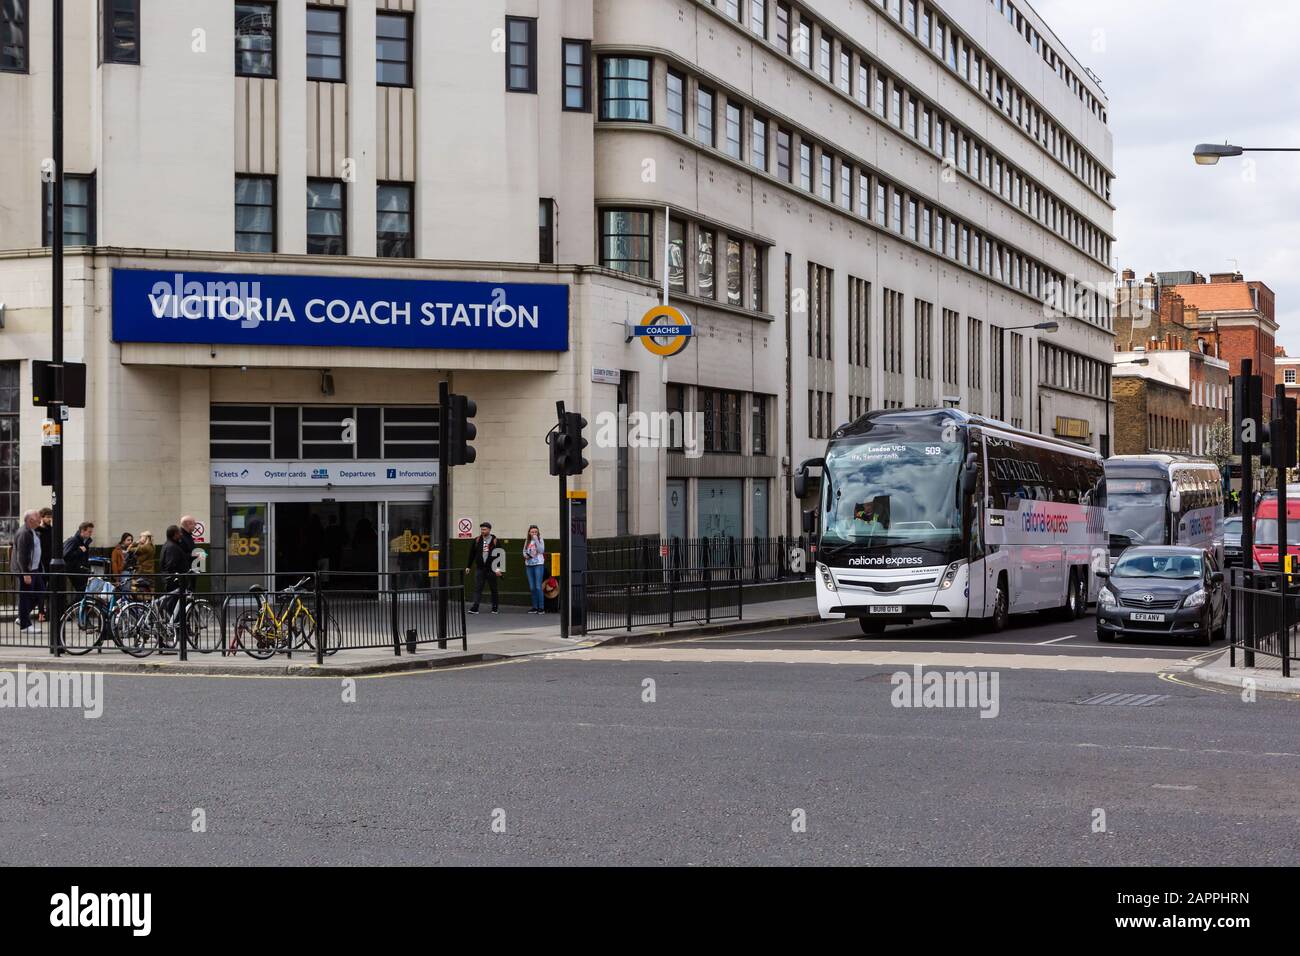 Victoria Coach Station on Buckingham Palace road. Stock Photo